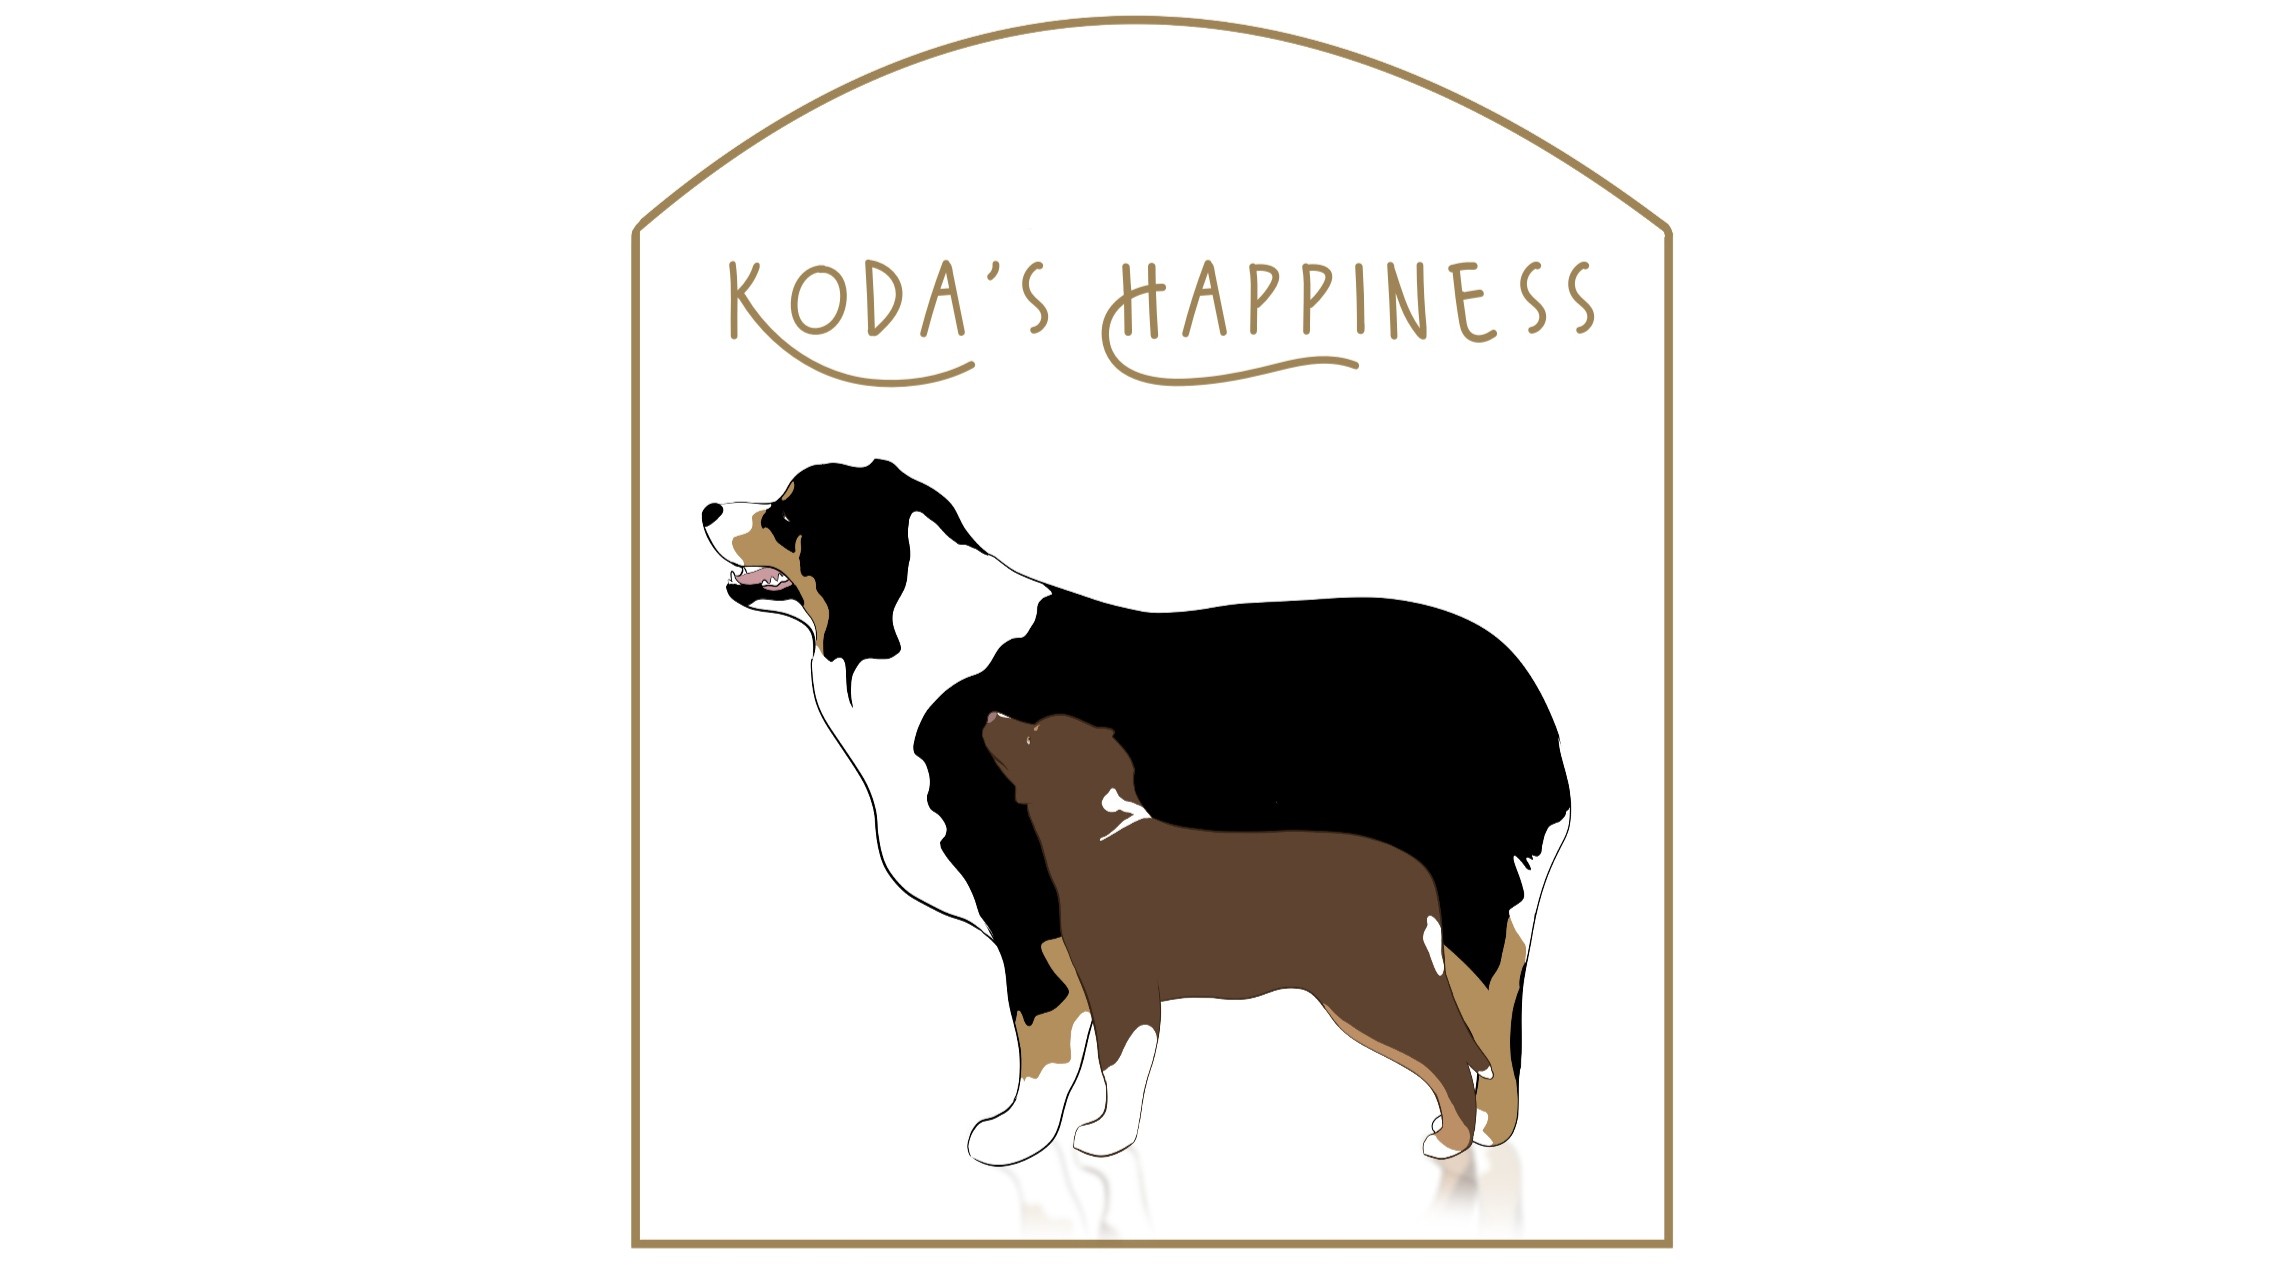 Koda's Happiness